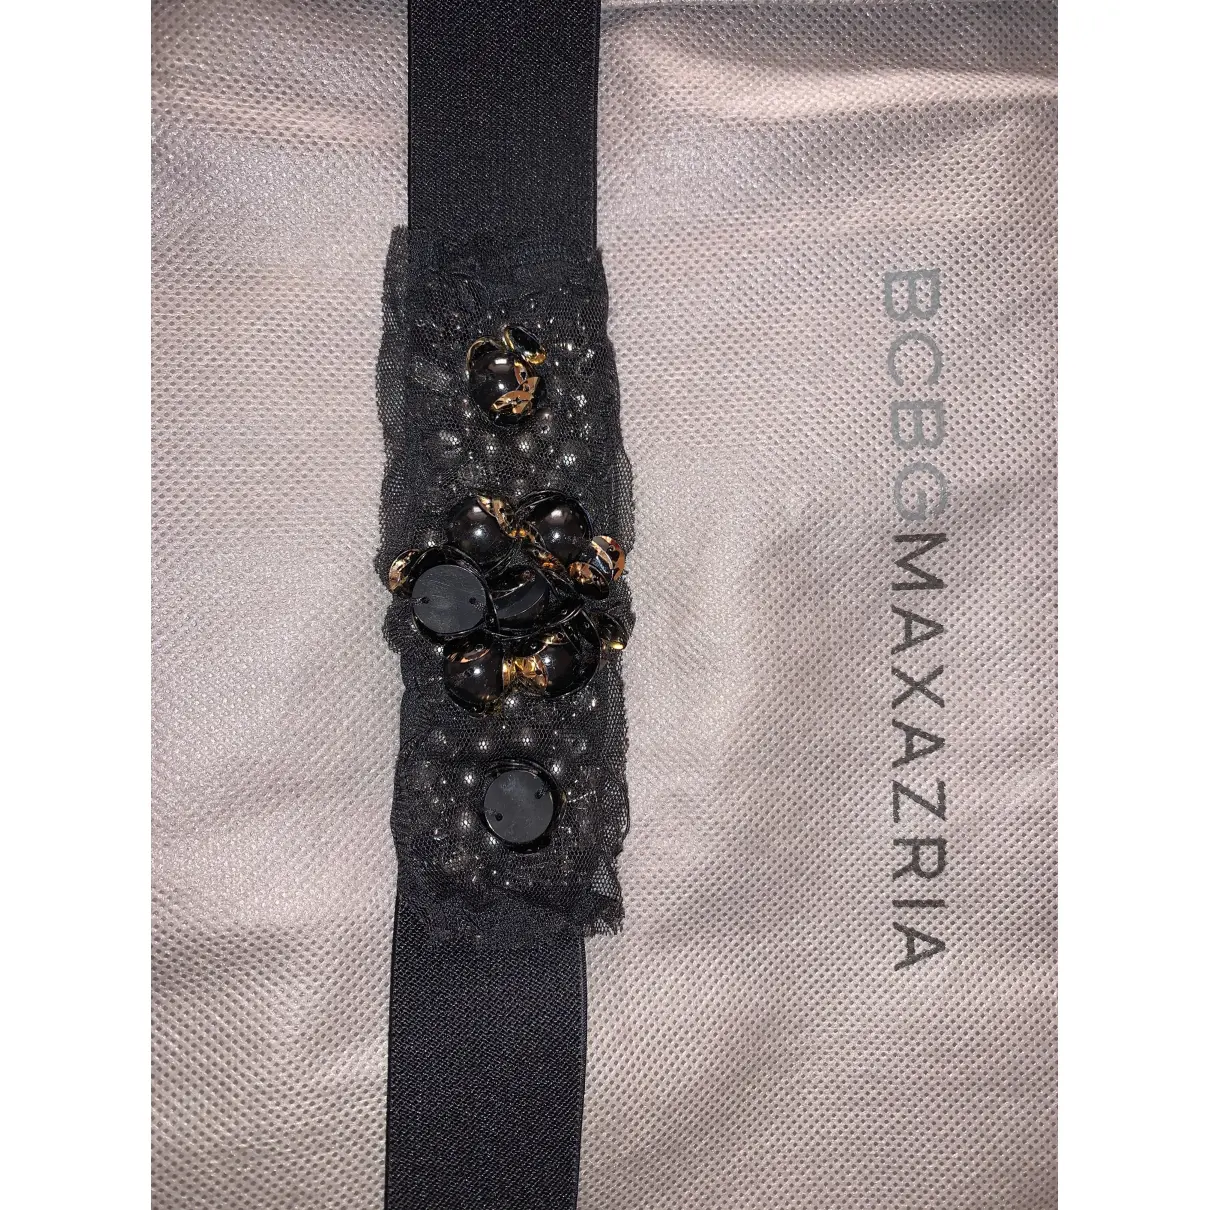 Buy Bcbg Max Azria Silk maxi dress online